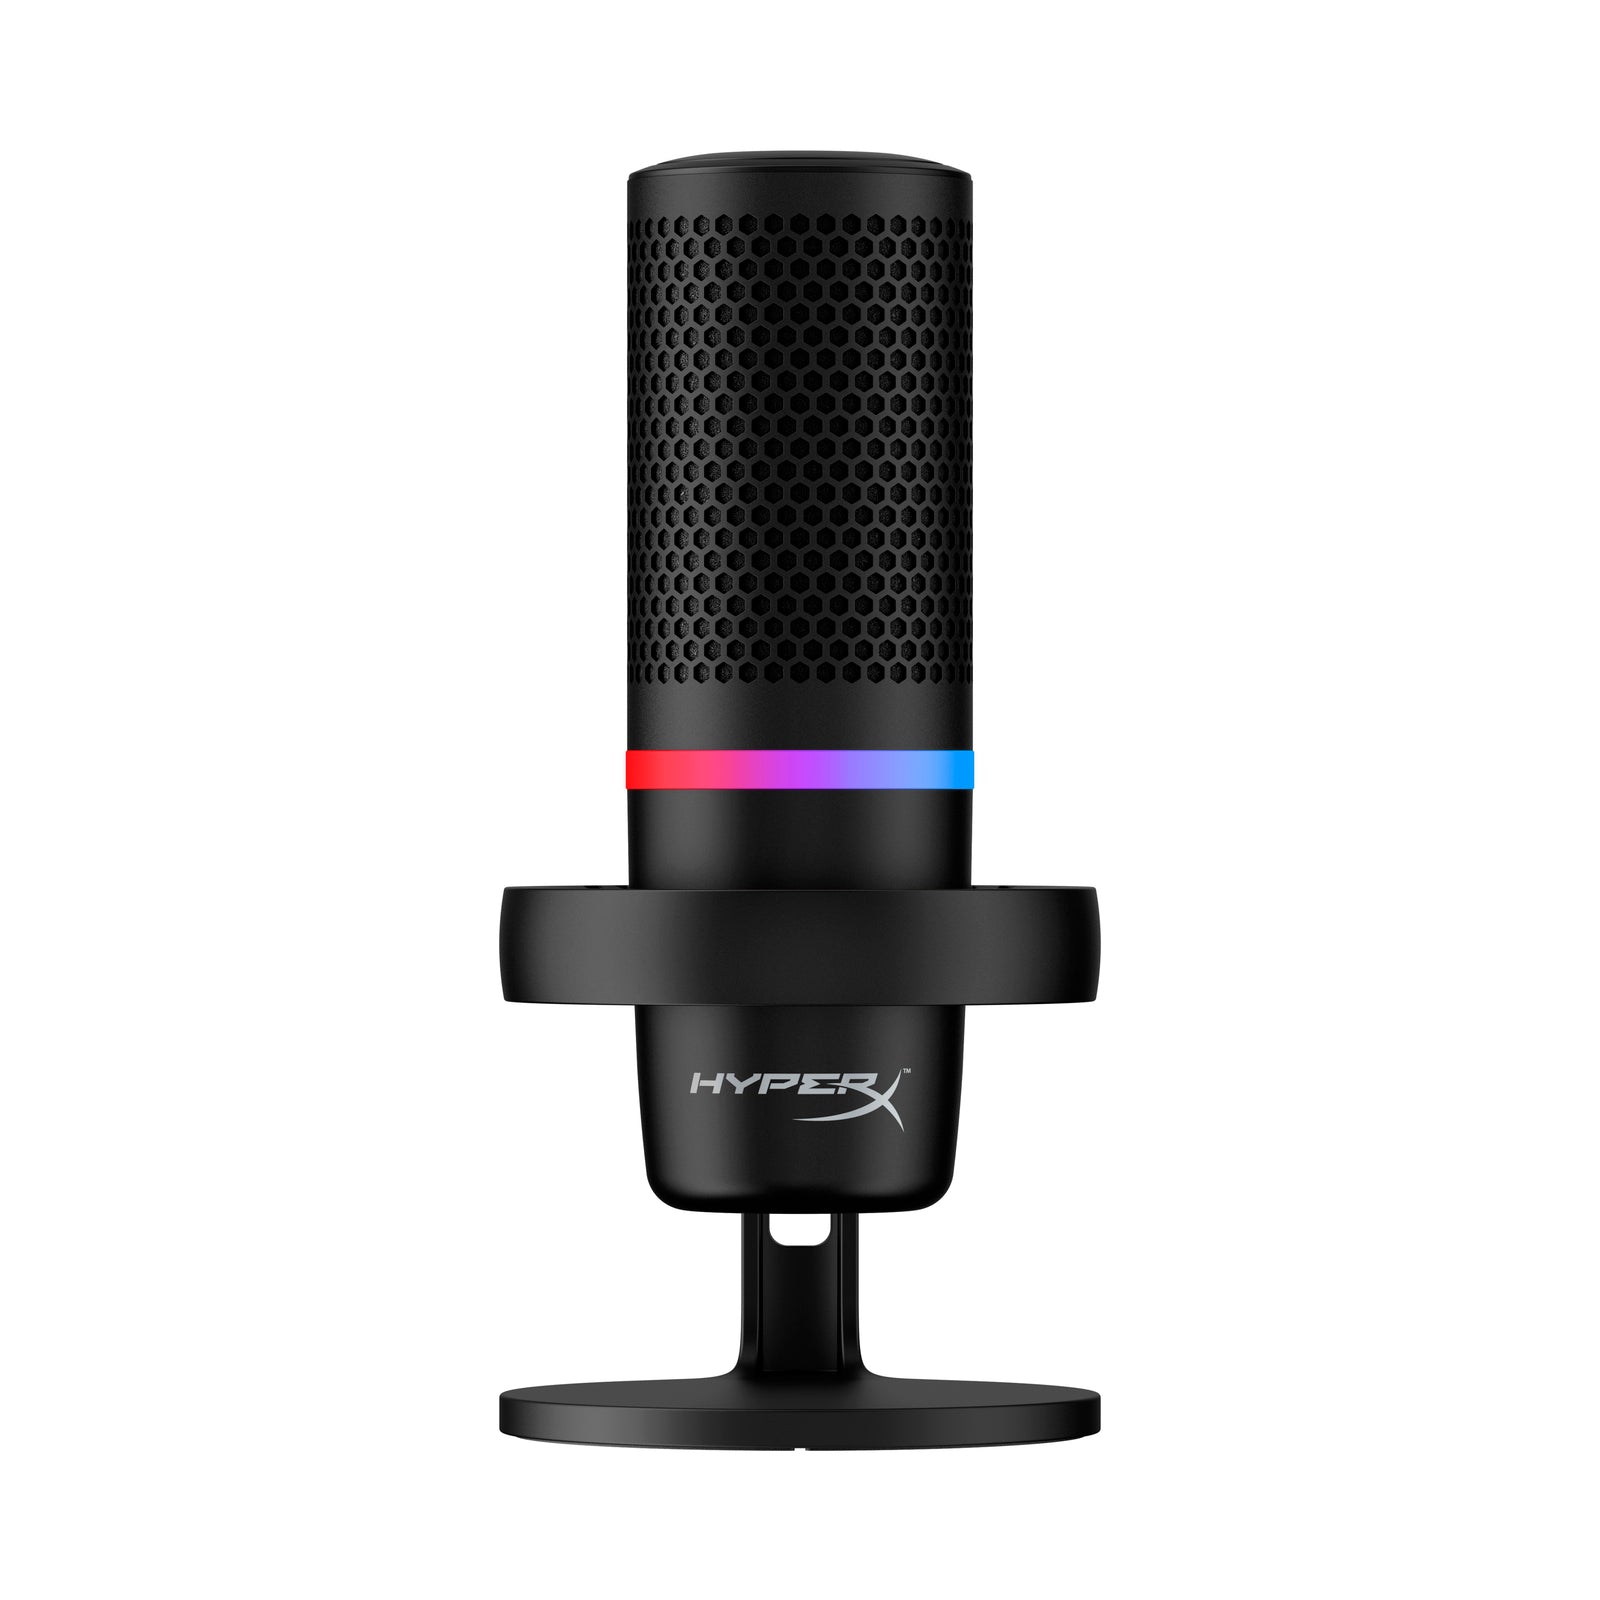 HyperX DuoCast - USB Microphone (Black) - RGB Lighting - Black